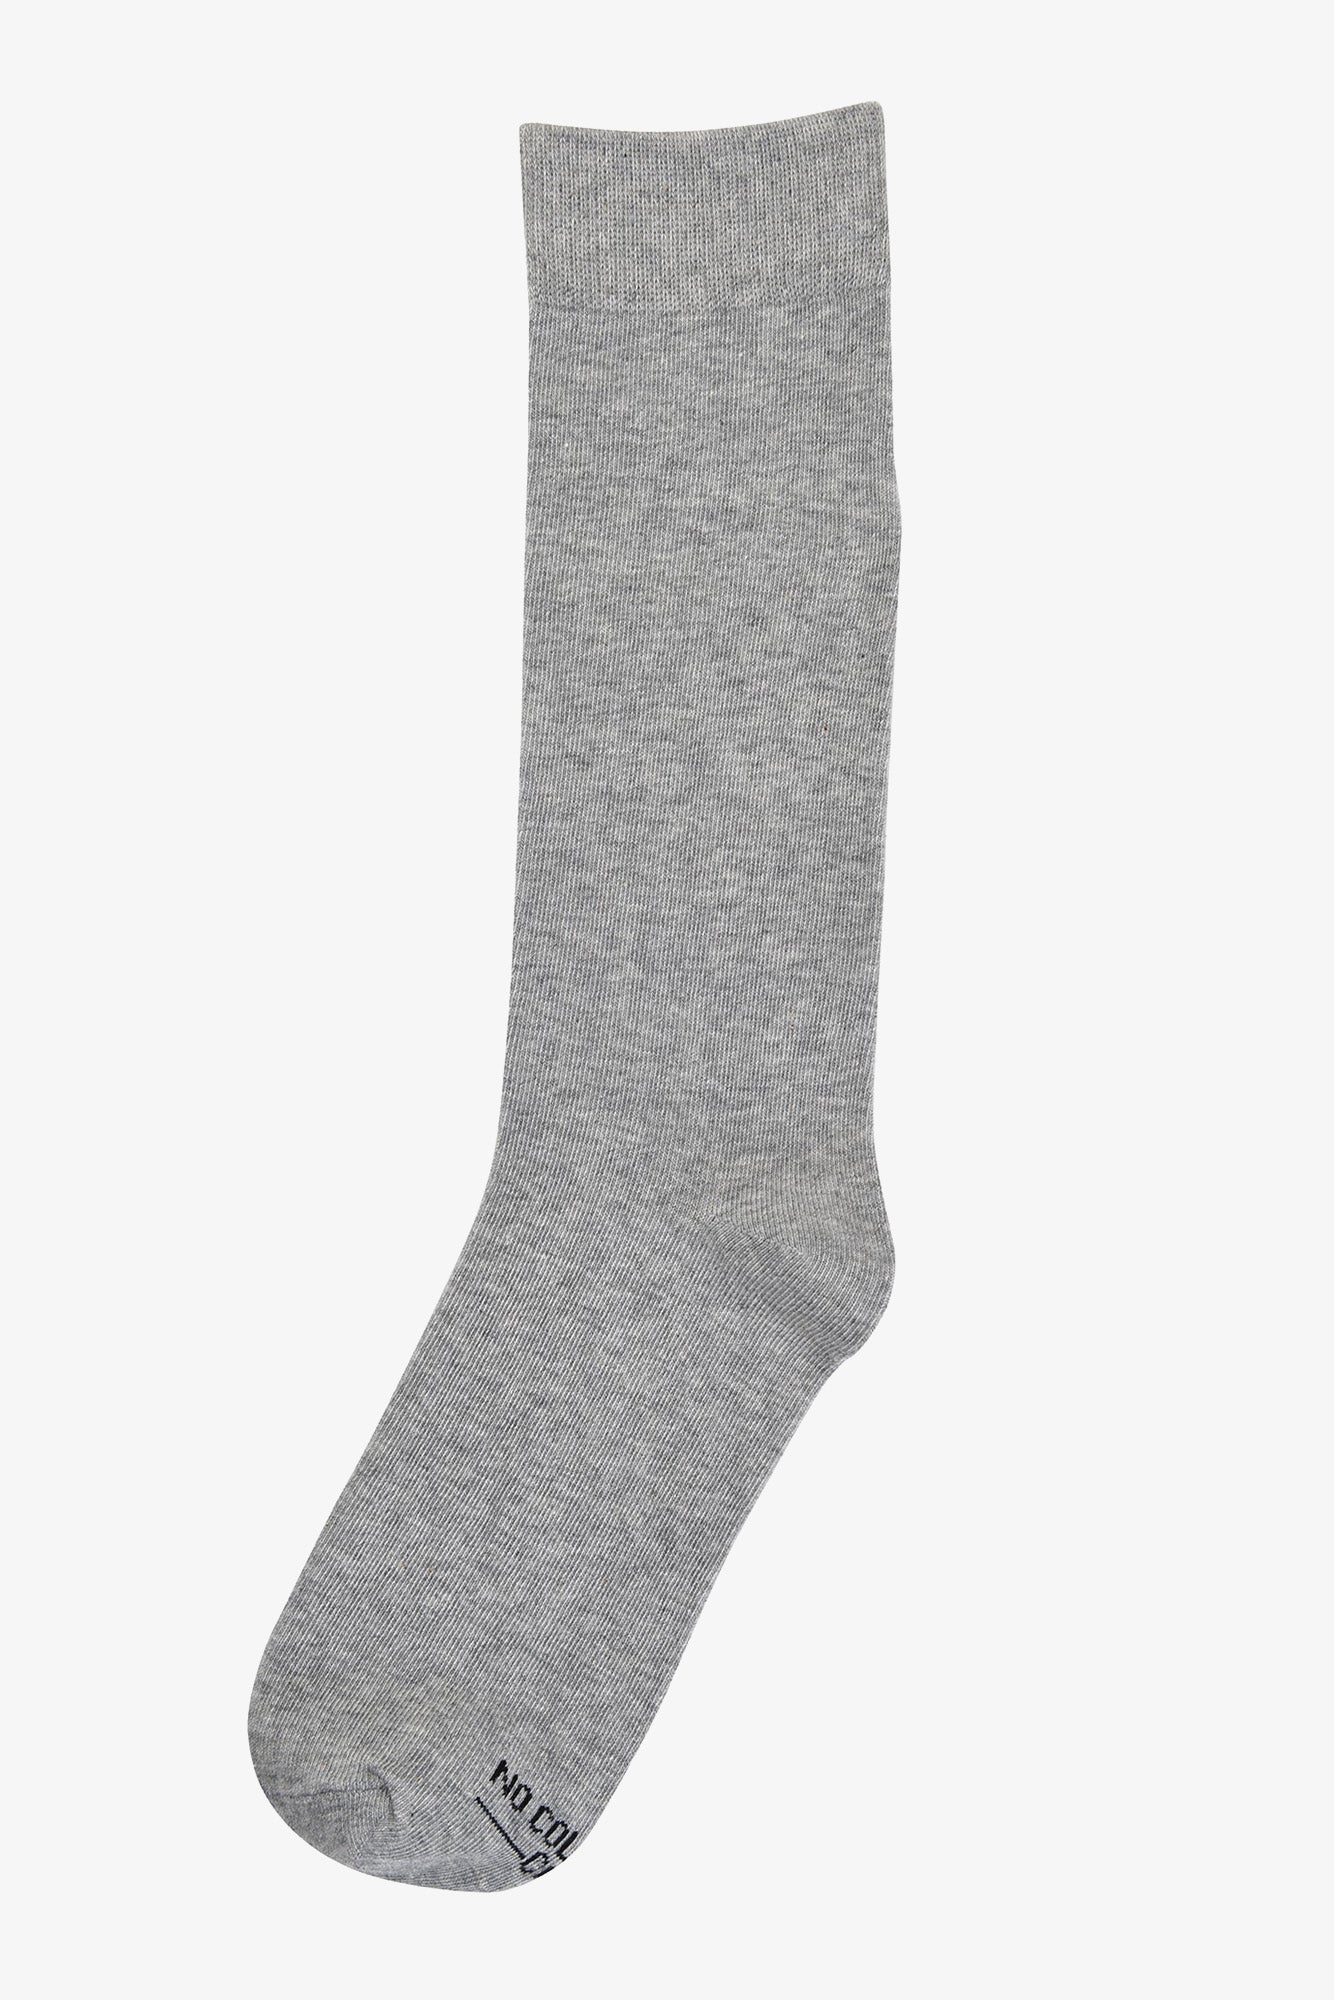 Solid Grey Groomsmen Socks by No Cold Feet